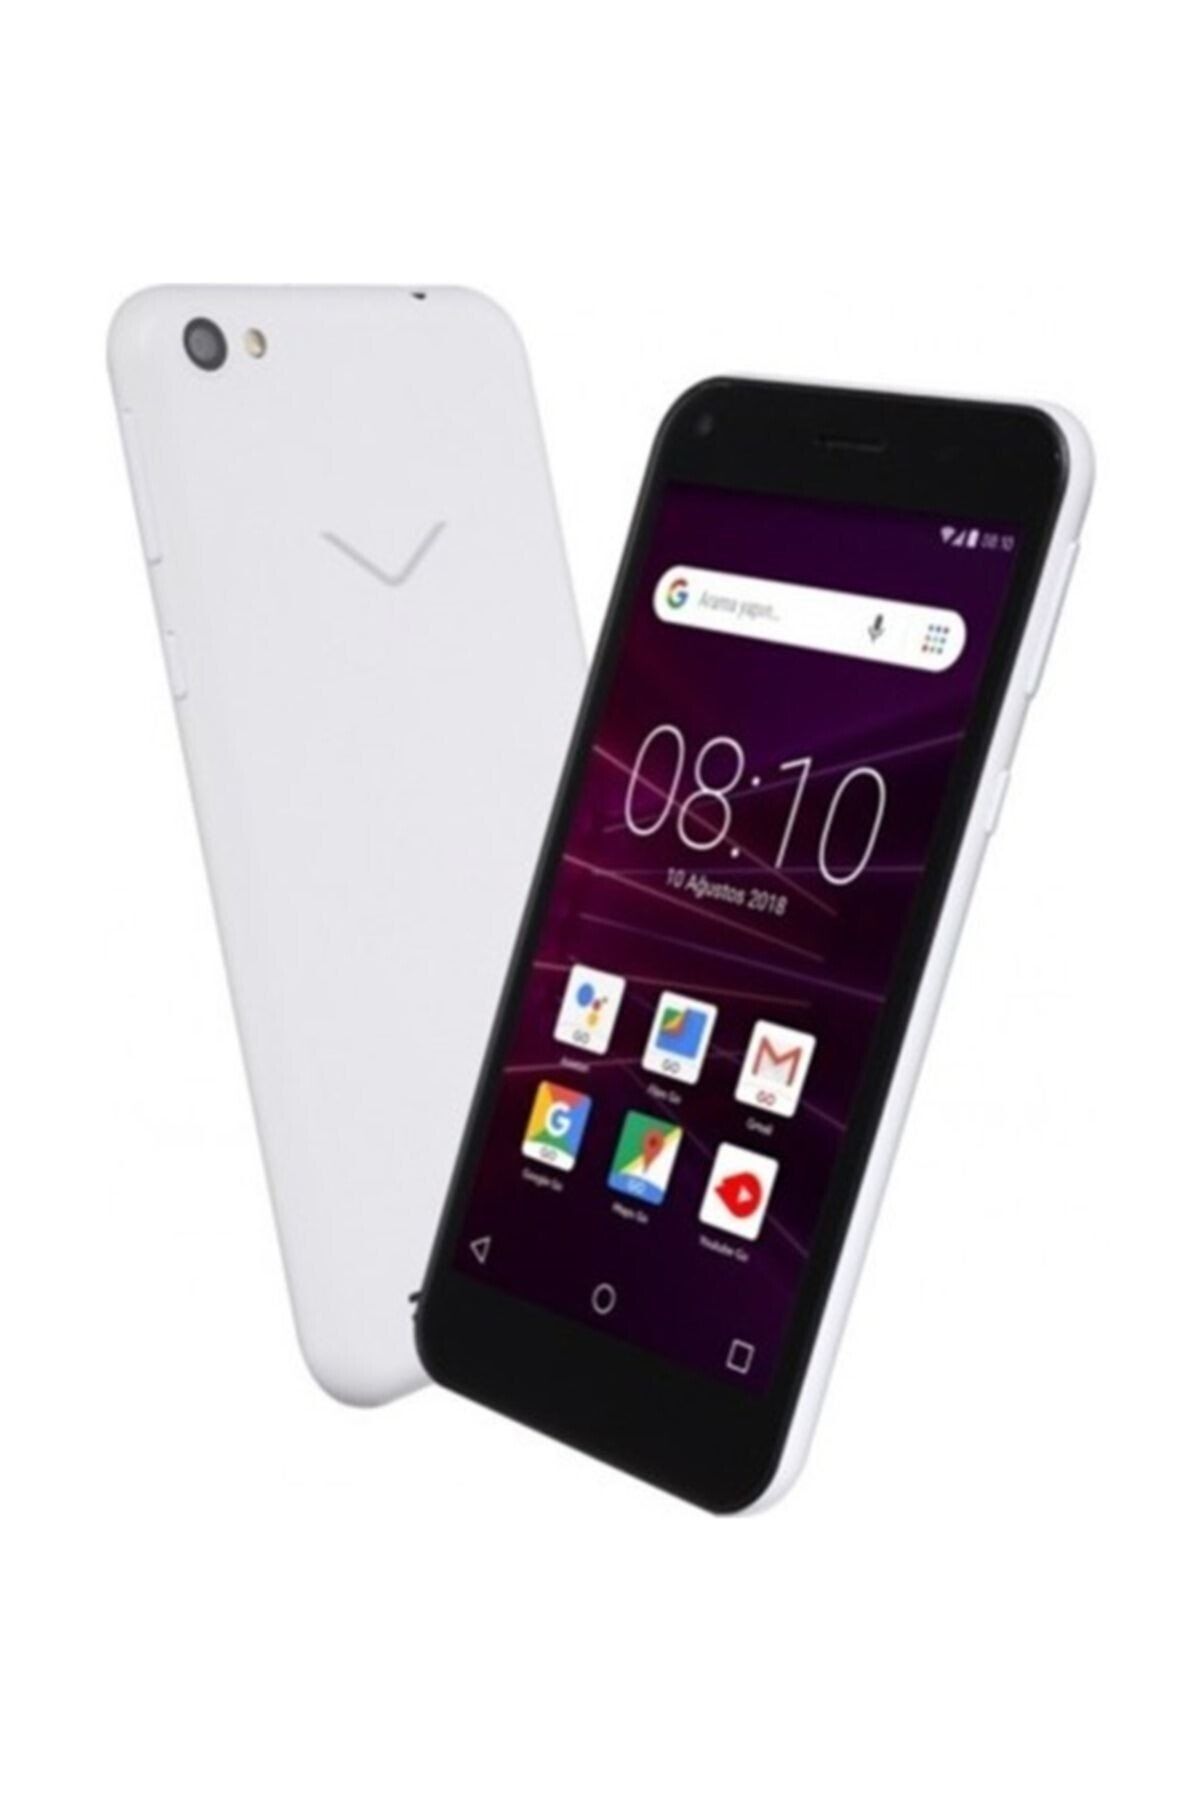 VESTEL Venüs Go 8GB Beyaz Cep Telefonu (Resmi Distribütör Garantili)